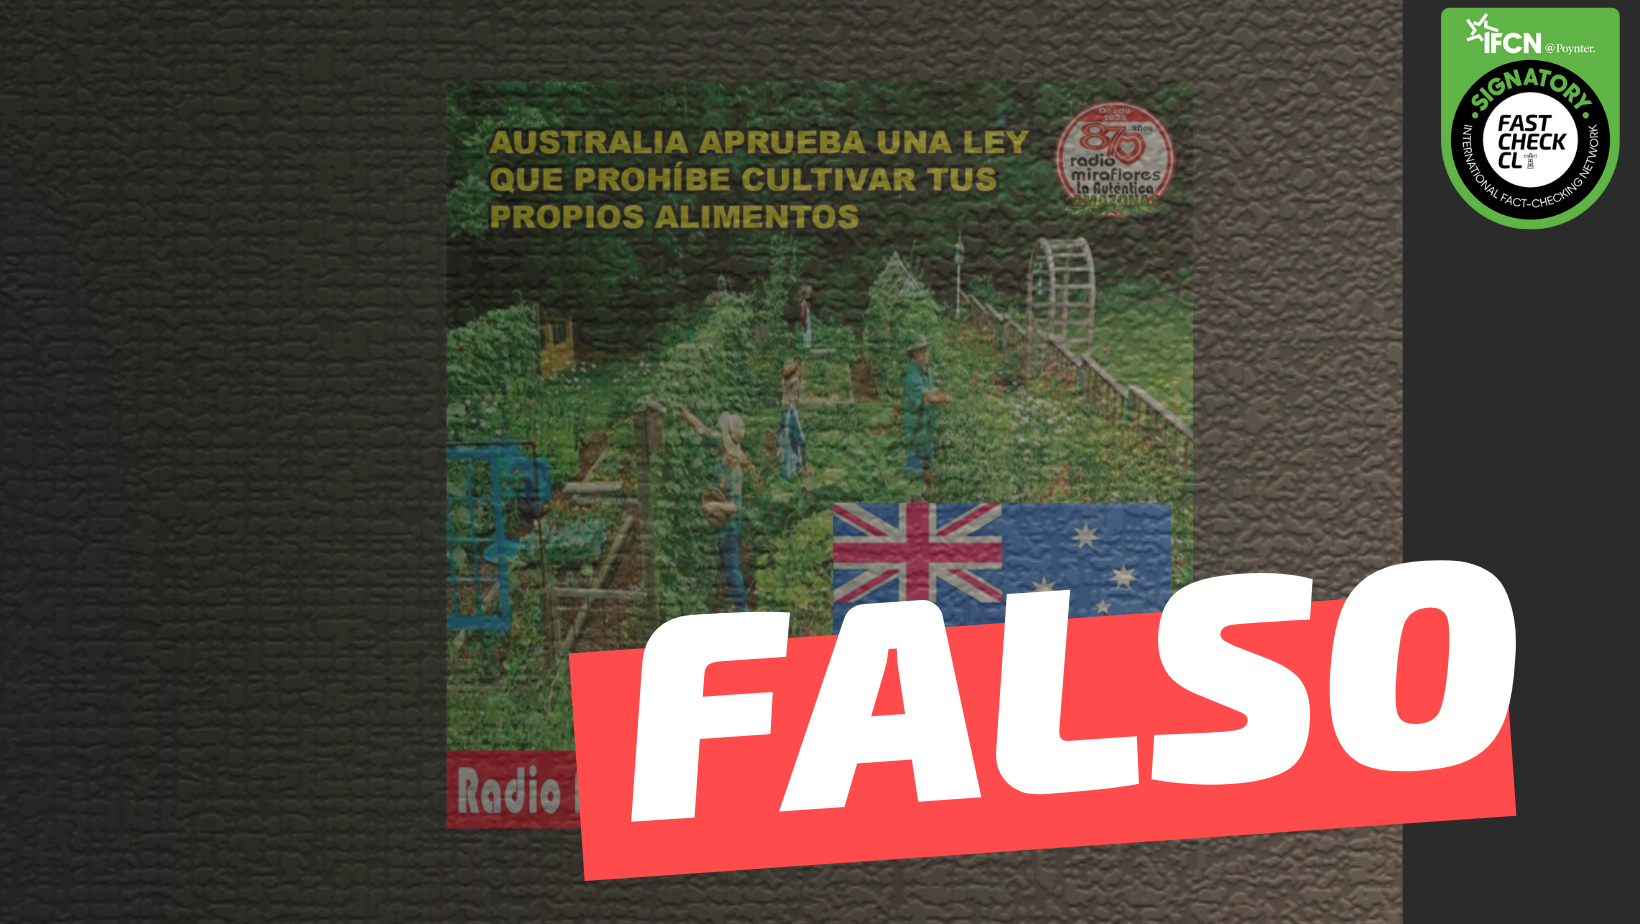 Read more about the article “Australia aprueba una ley que prohibe cultivar tus propios alimentos”: #Falso